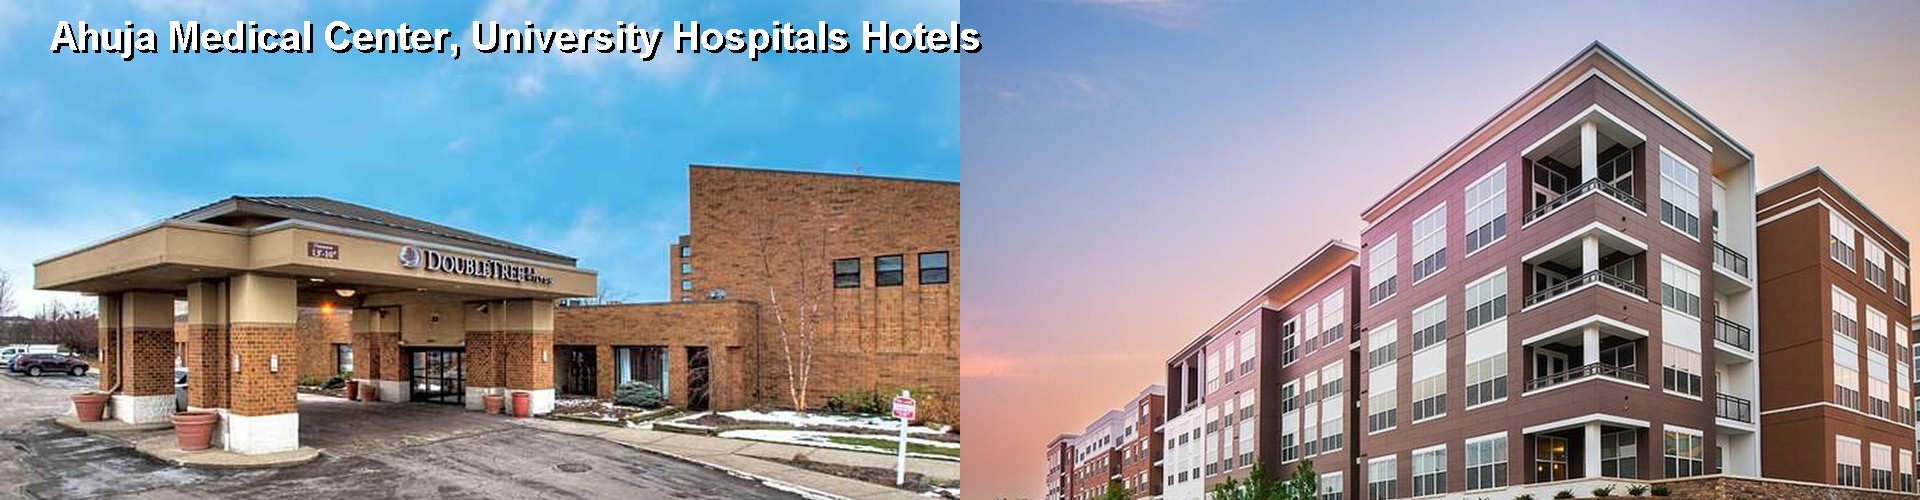 5 Best Hotels near Ahuja Medical Center, University Hospitals